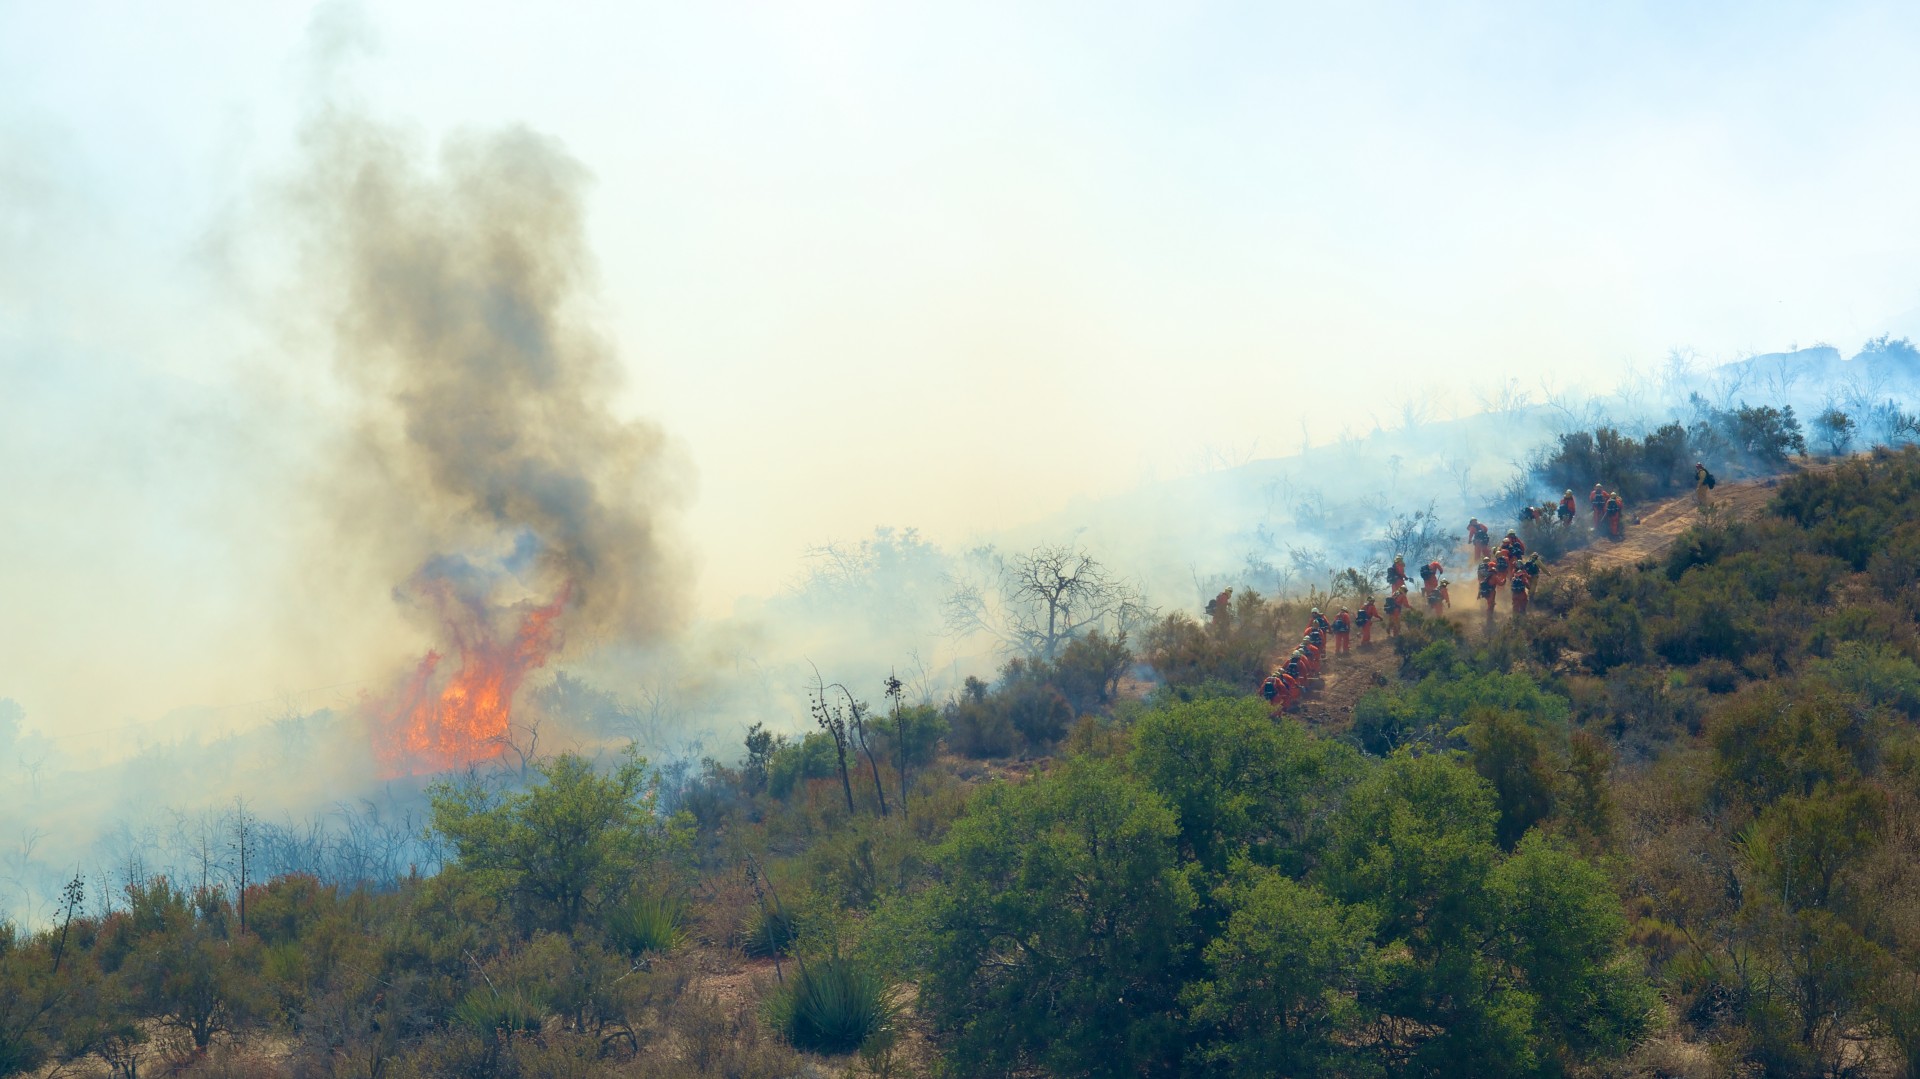 flame burst near california firefighters